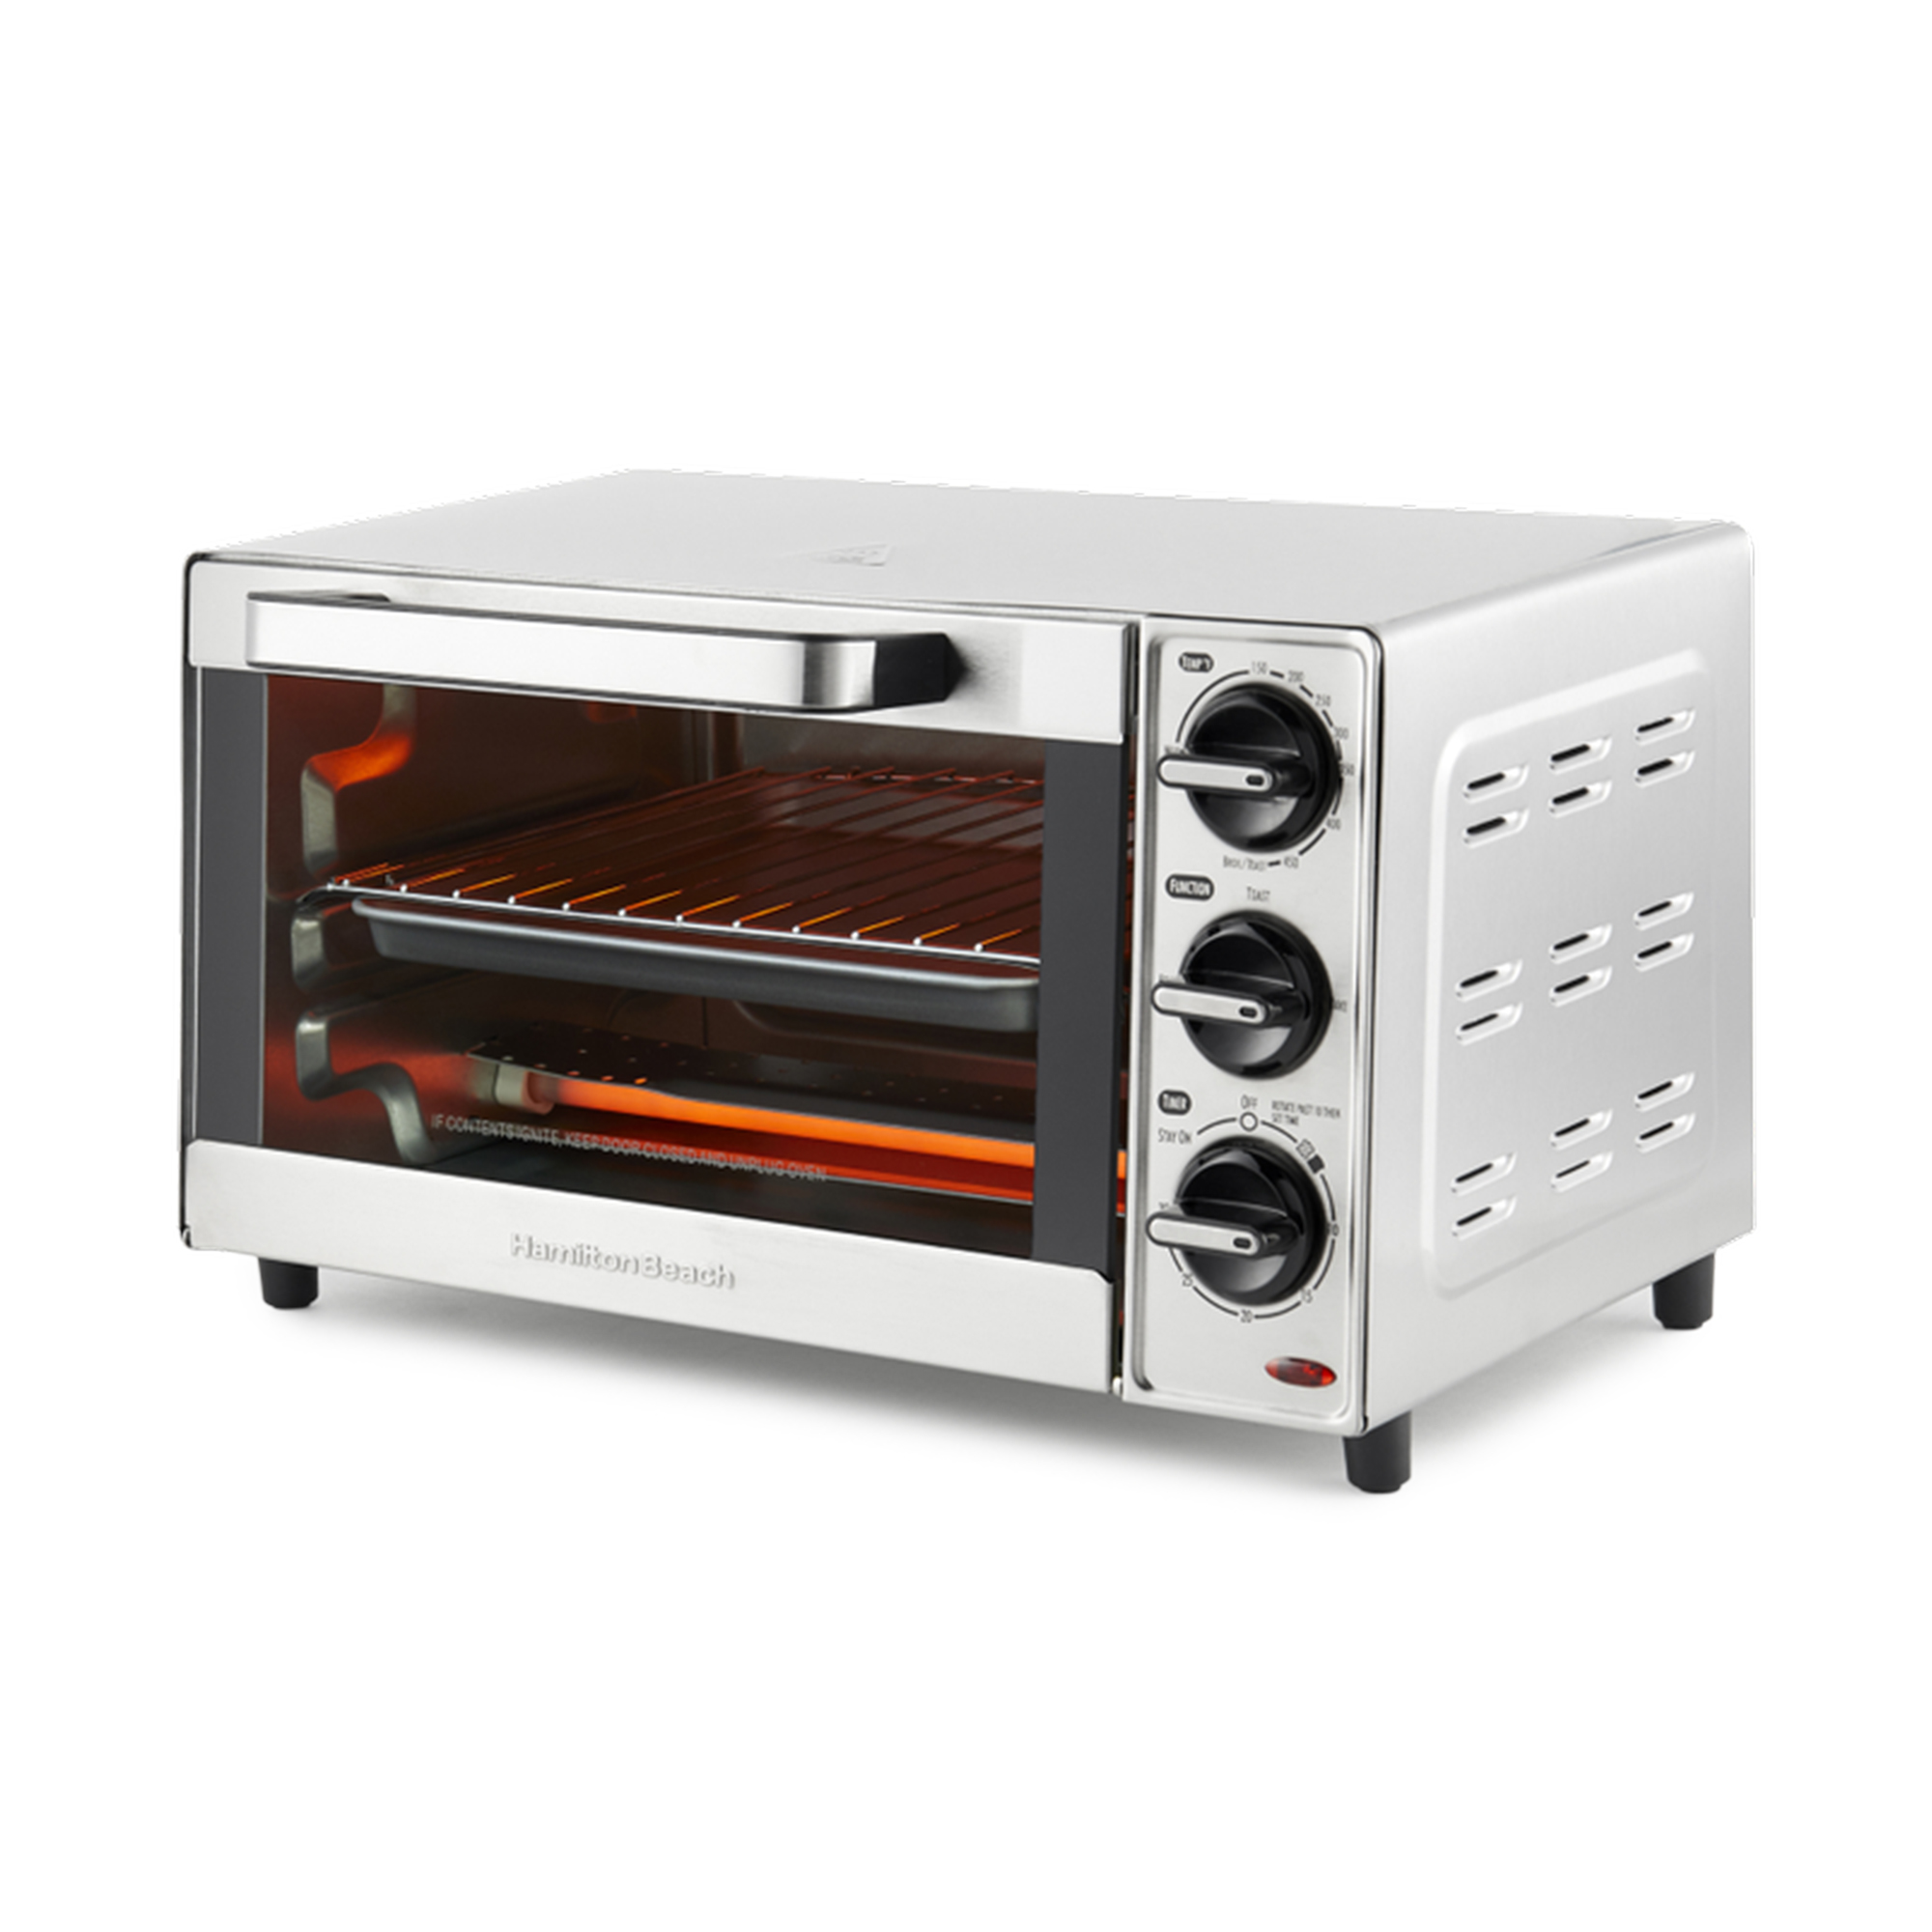 Hamilton Beach Countertop Toaster Oven | Model# 31401 - image 1 of 6